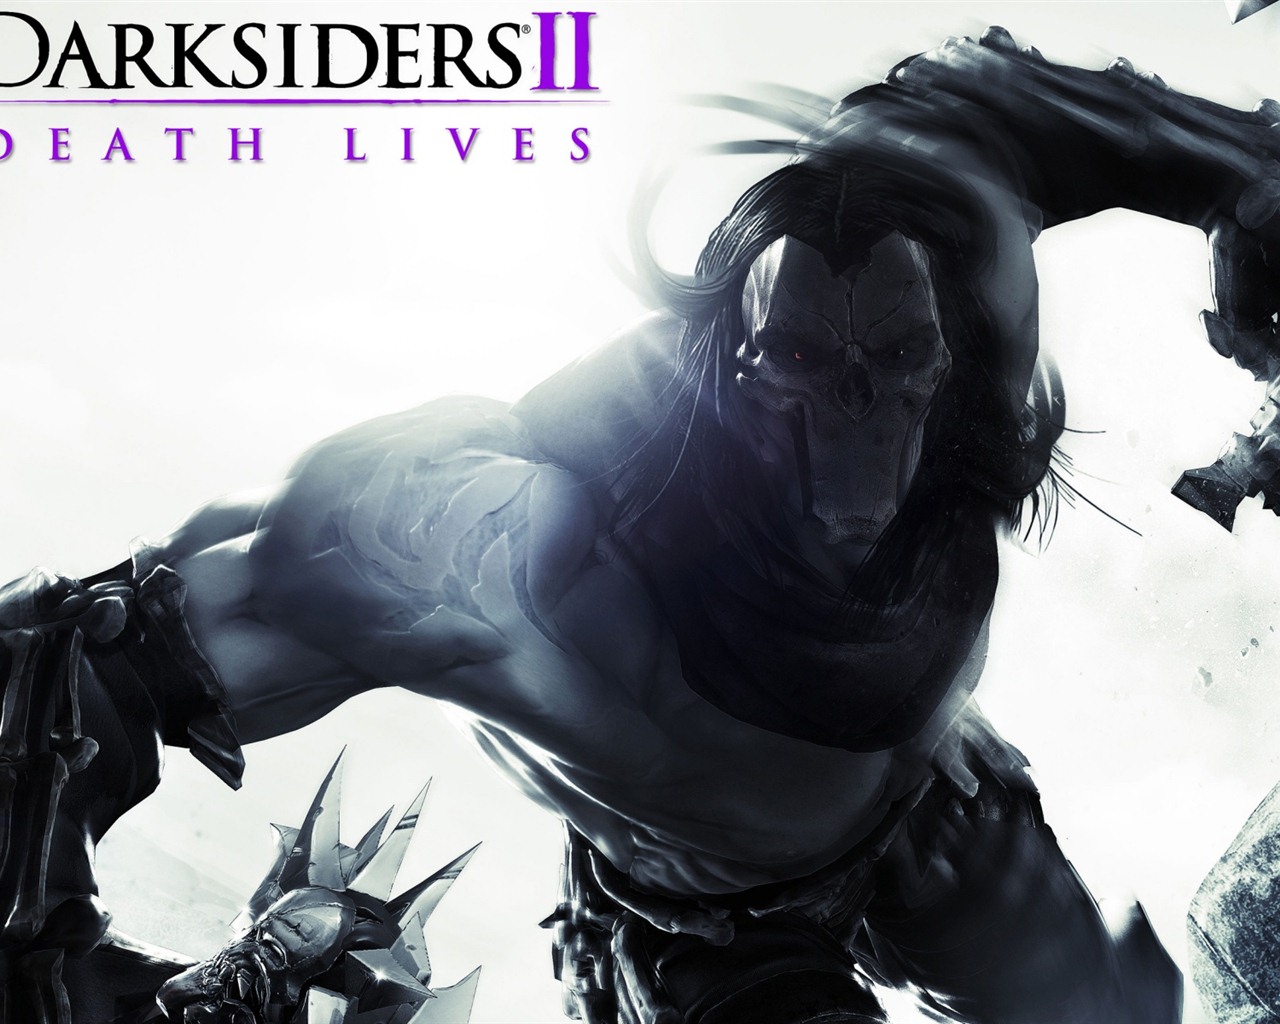 Darksiders II 暗黑血统 2 游戏高清壁纸6 - 1280x1024